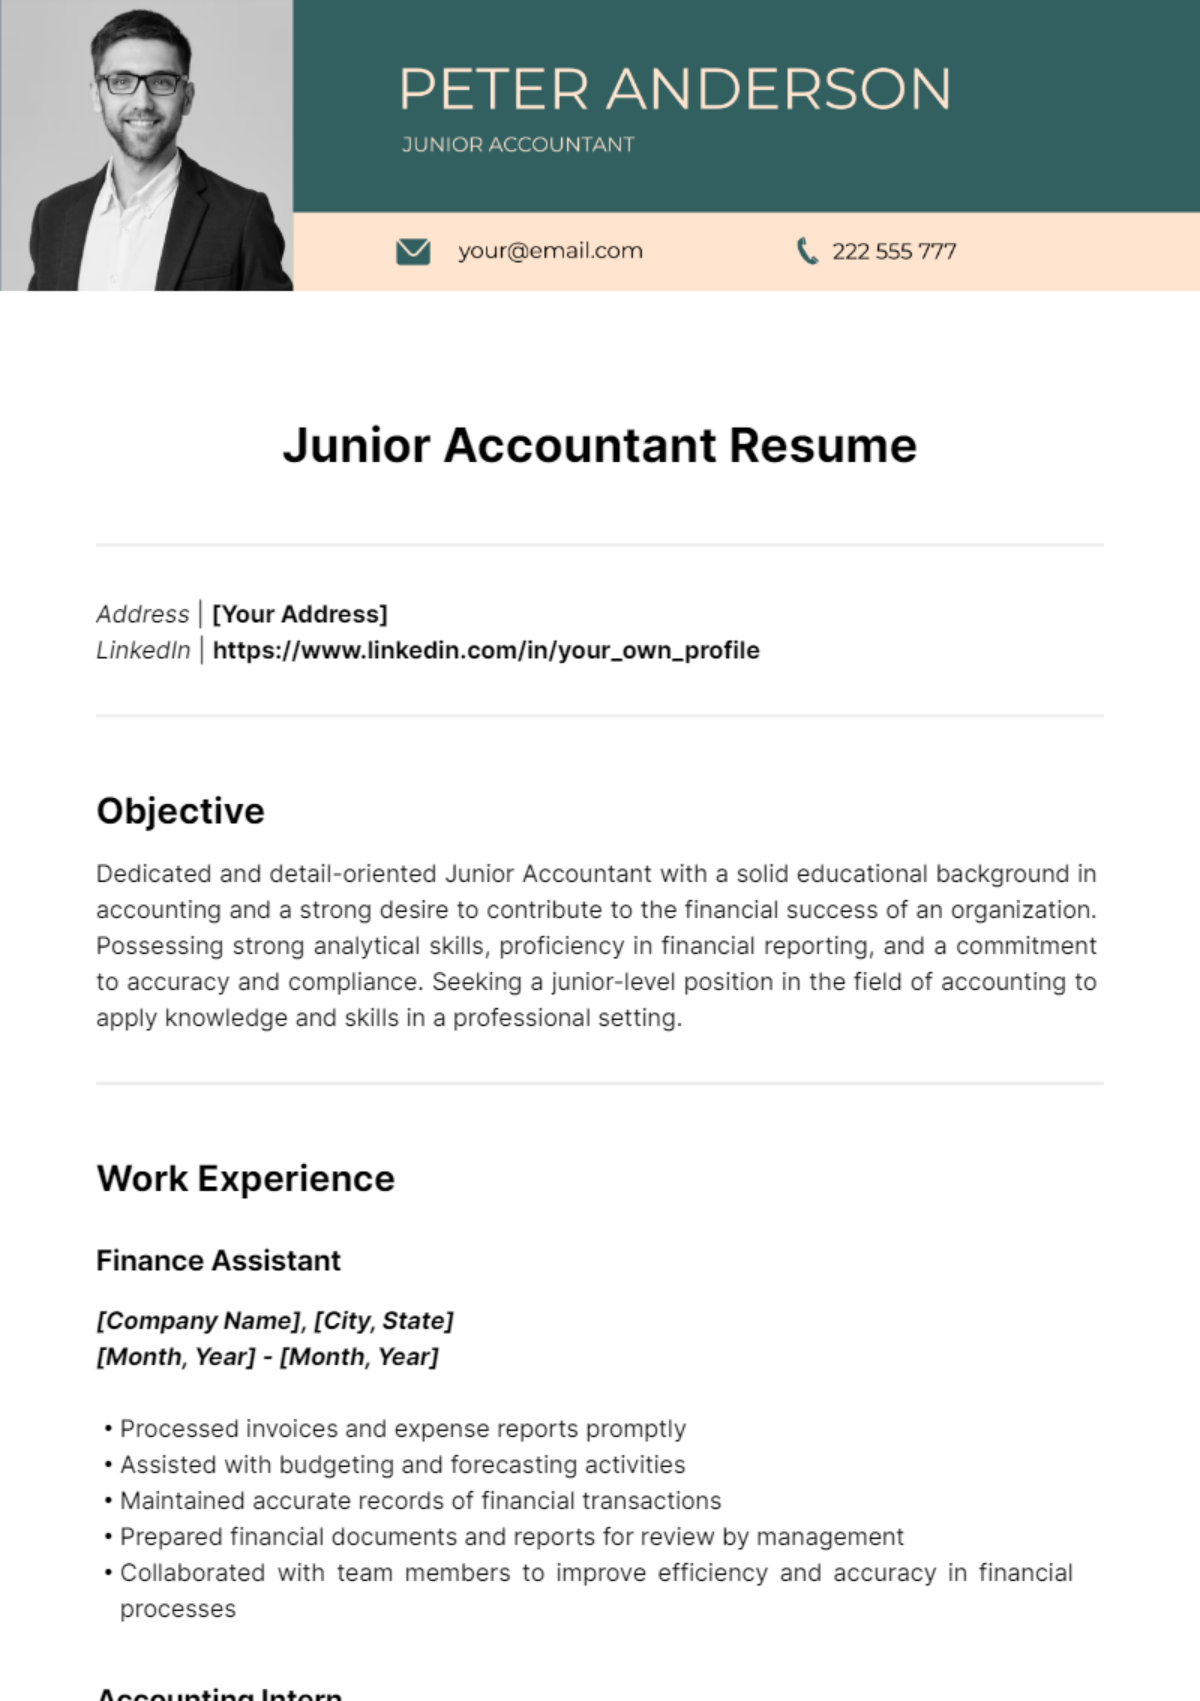 Junior Accountant Resume Template